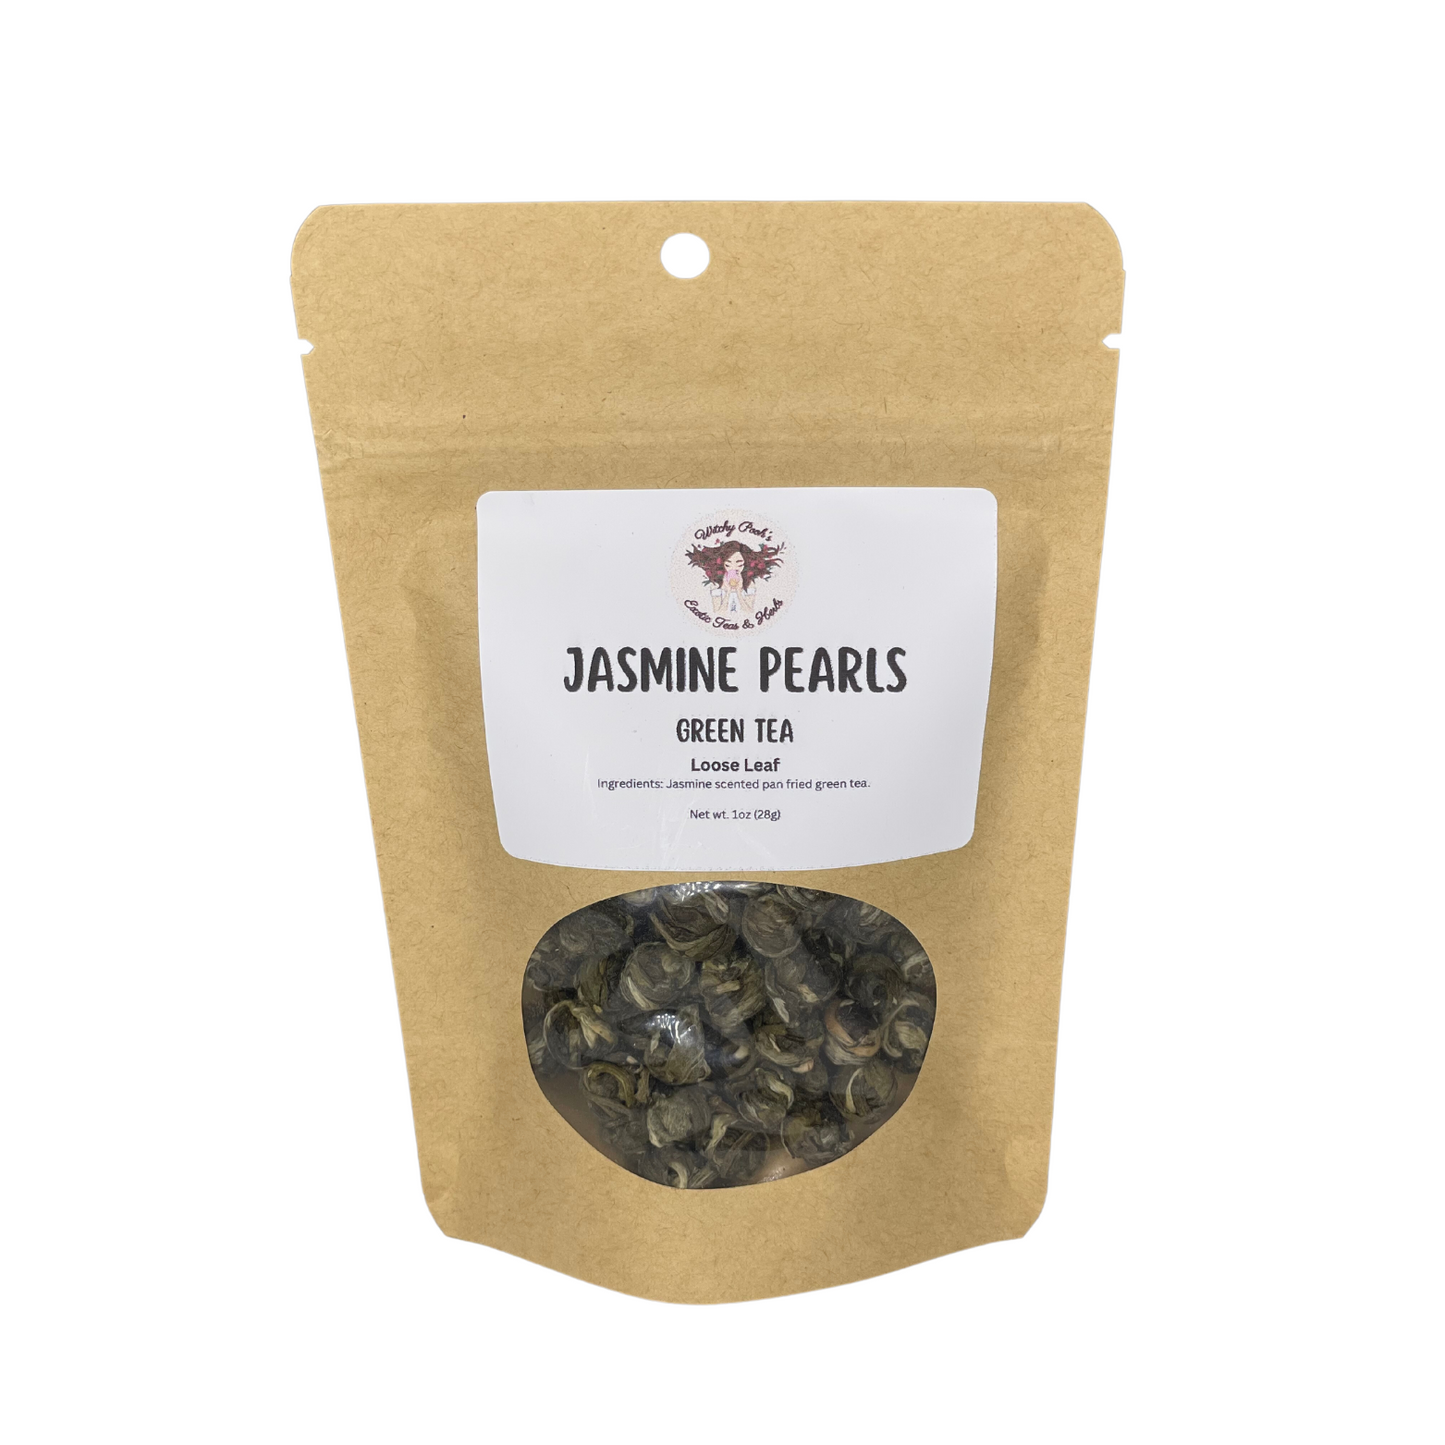 Jasmine Pearls Green Tea (Jasmine Scented Pan Fried Green Tea Leaves)